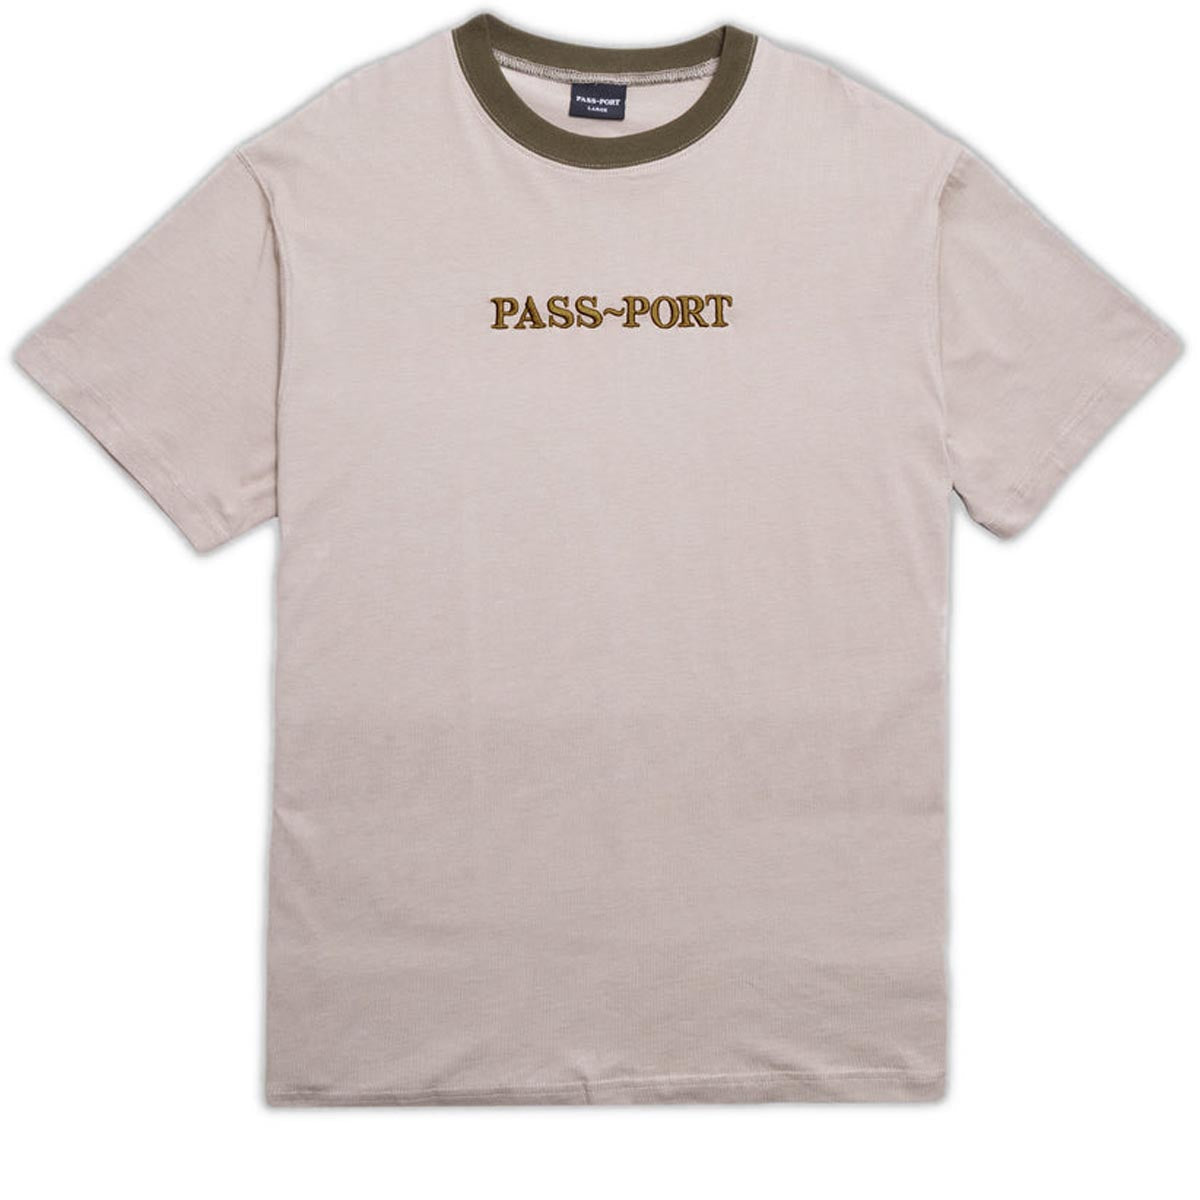 Passport Official Contrast Organic T-Shirt - Khaki image 1